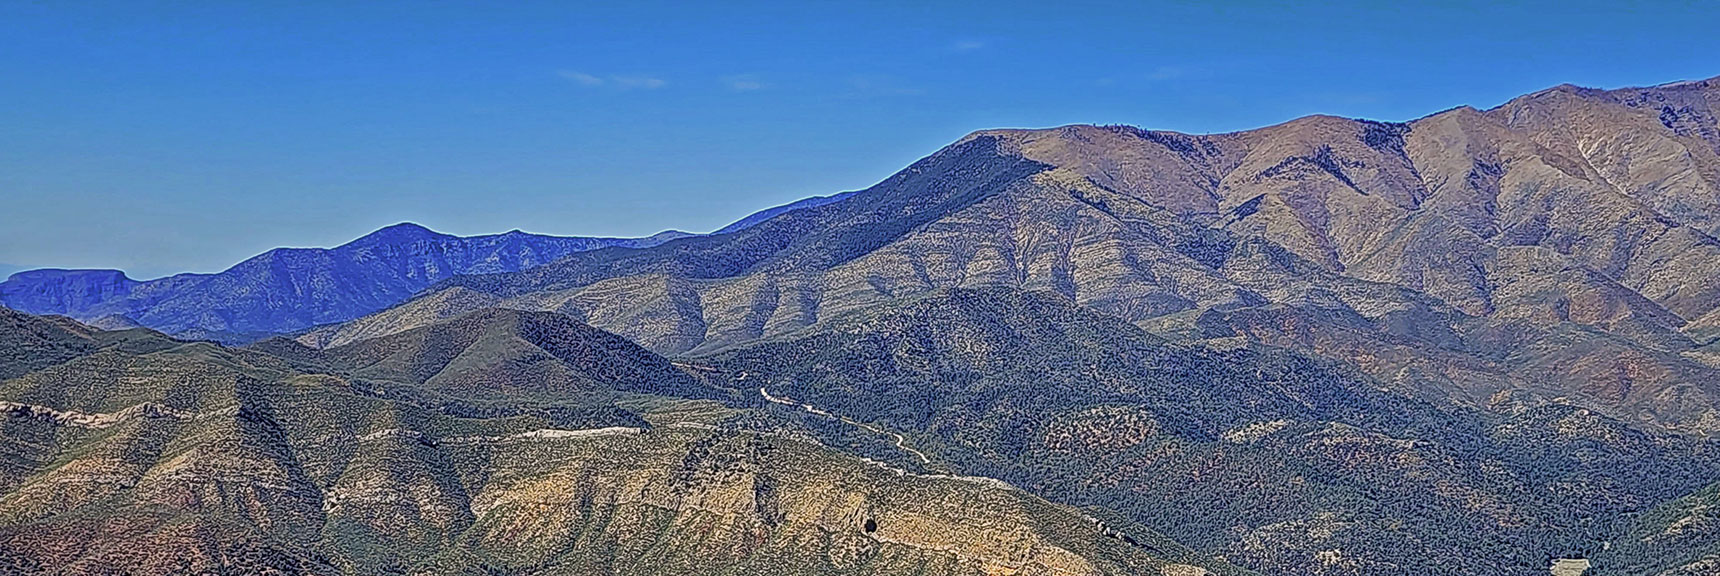 Faint Lovell Summit Road Heading Toward Sexton Ridge Base Before Descending to Trout Canyon. | Mini Matterhorn Pinnacle | Wilson Ridge | Lovell Canyon, Nevada